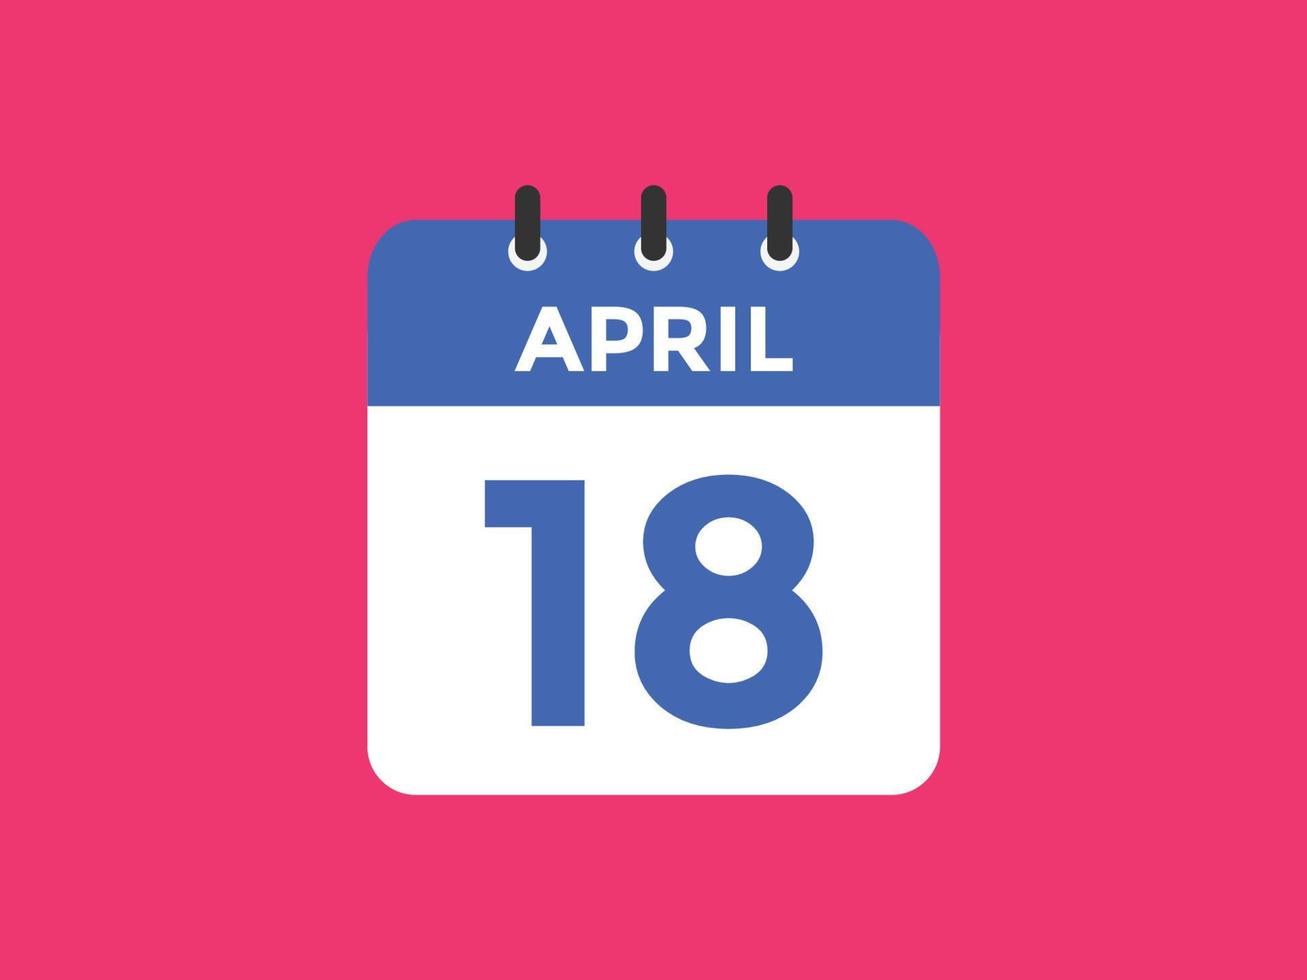 april 18 calendar reminder. 18th april daily calendar icon template. Calendar 18th april icon Design template. Vector illustration